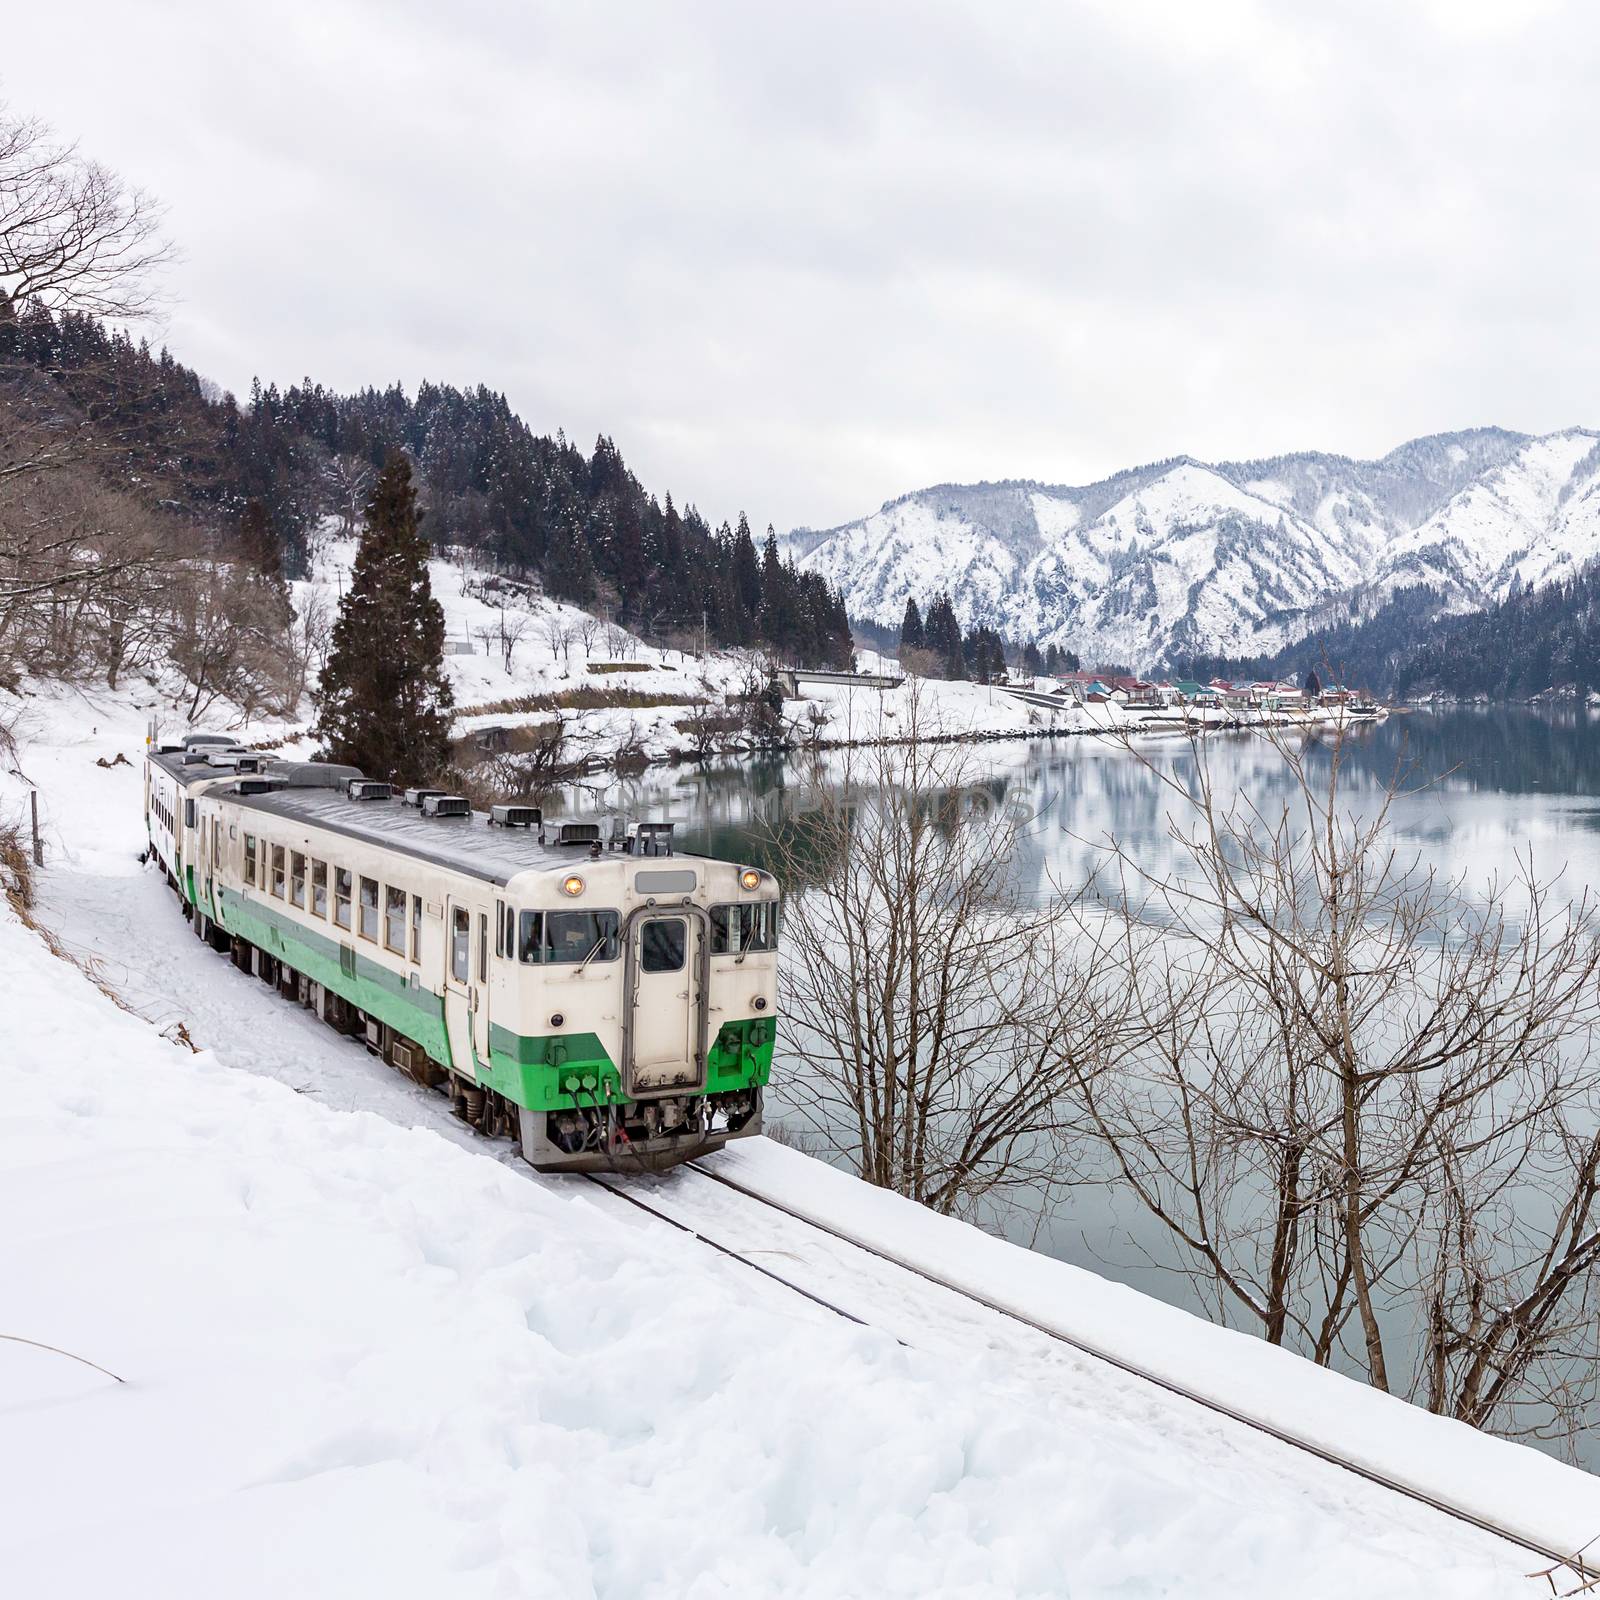 Train in Winter landscape snow by vichie81